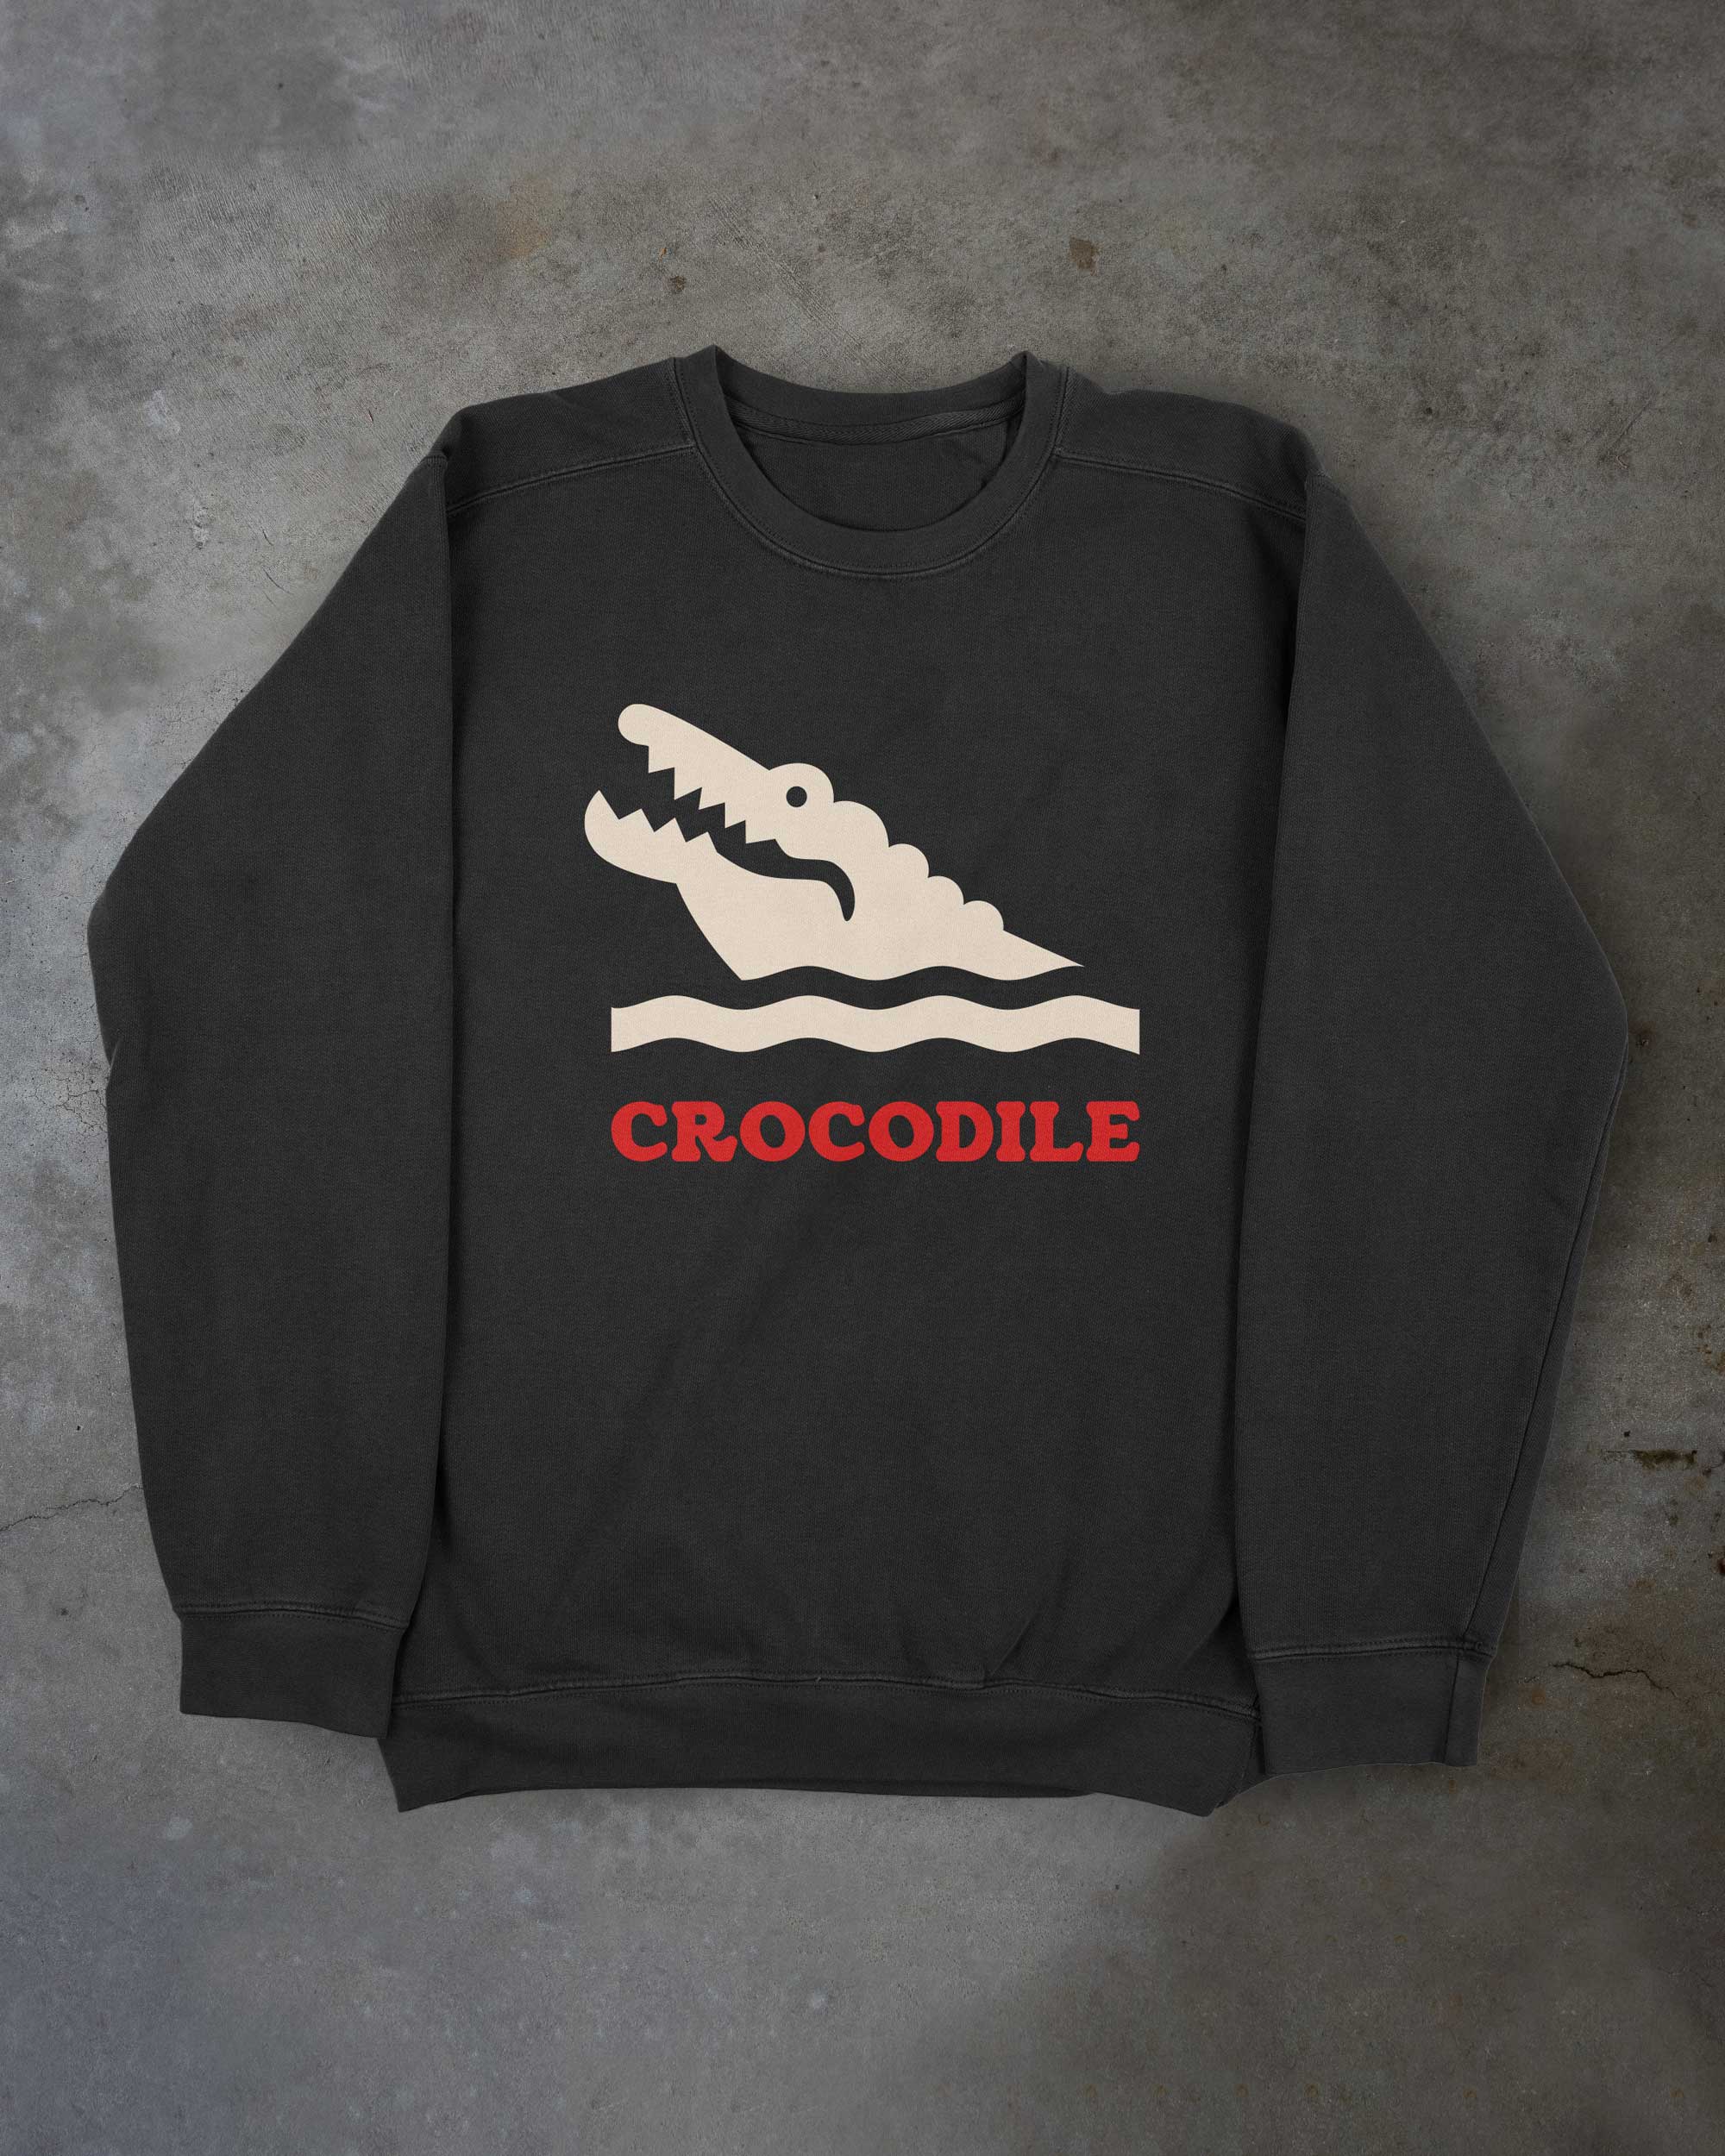 The Croc Sweater